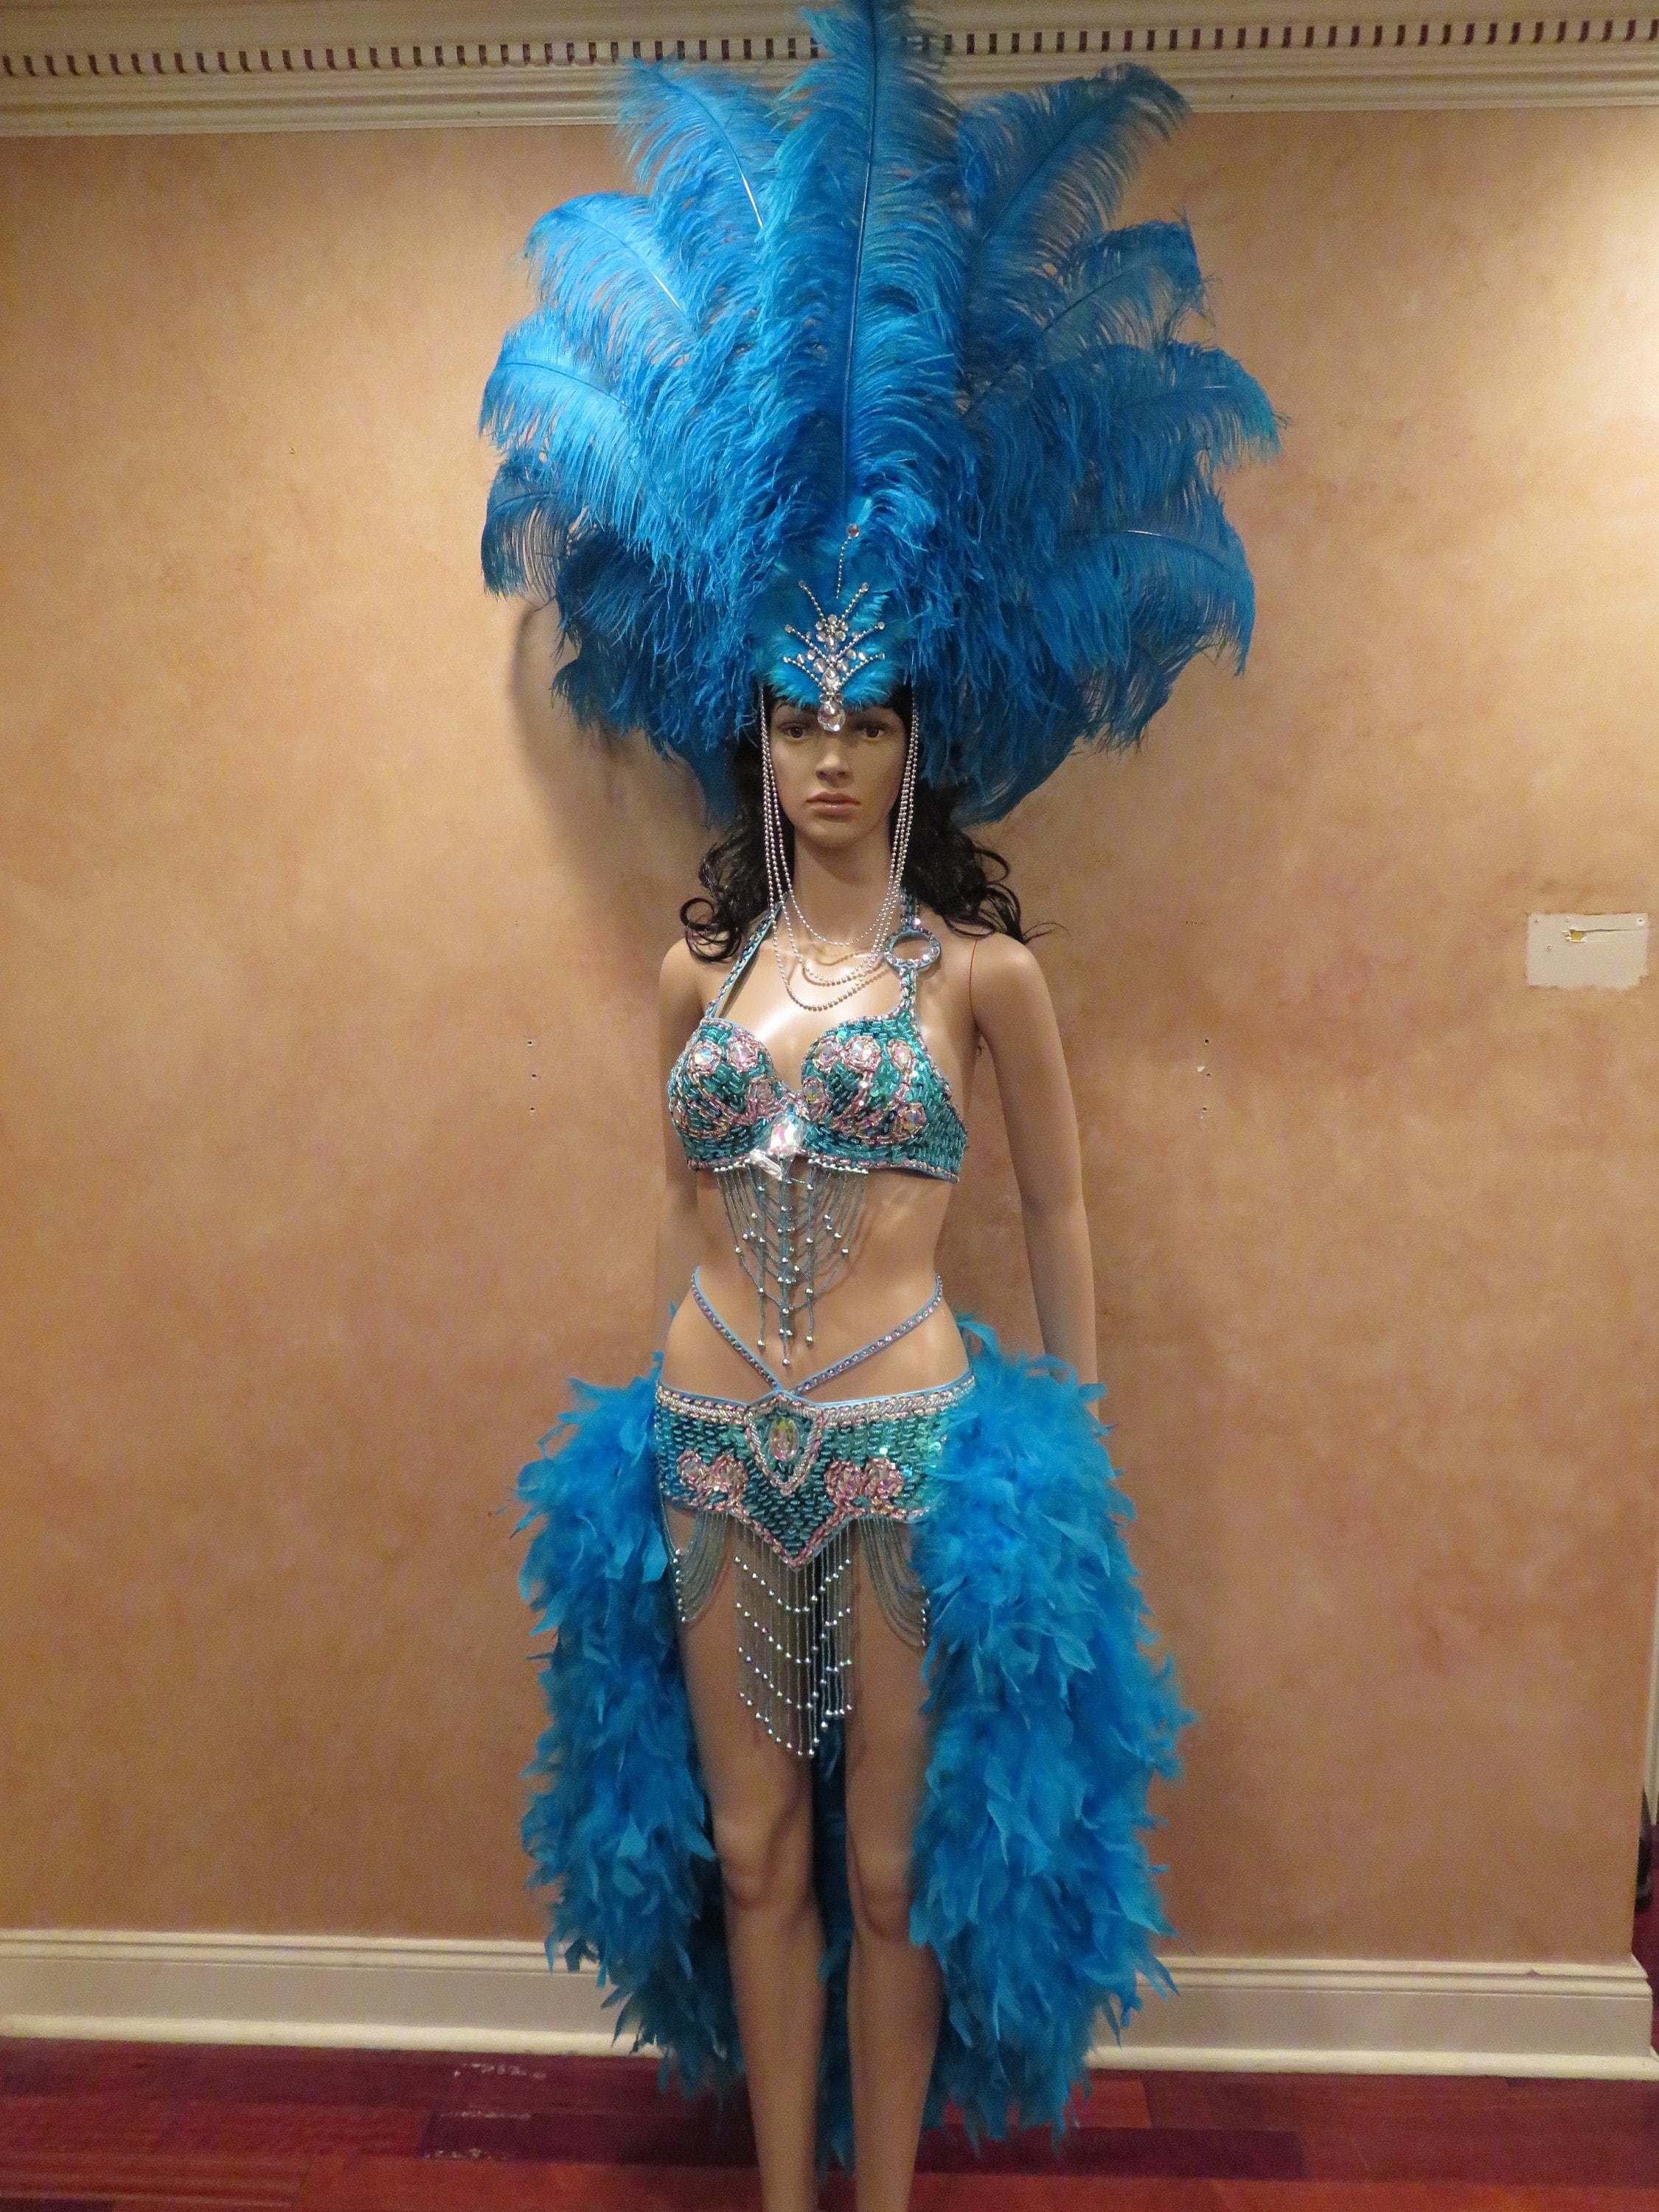 Best of Vegas showgirl images